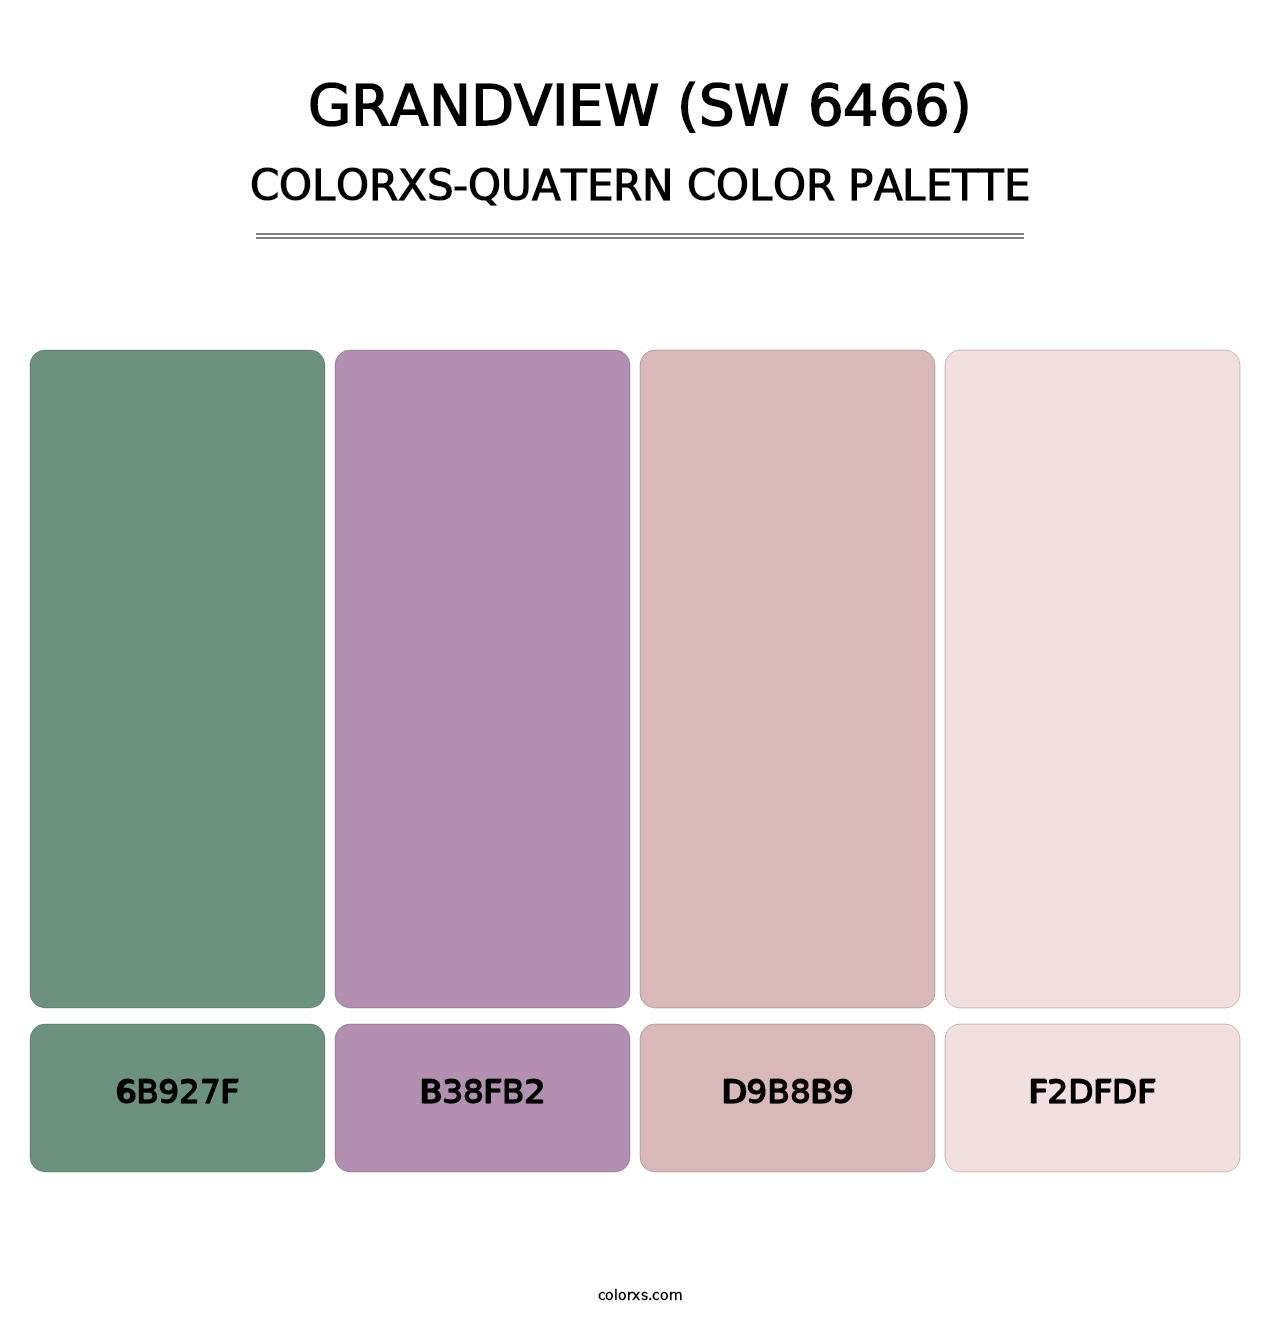 Grandview (SW 6466) - Colorxs Quatern Palette